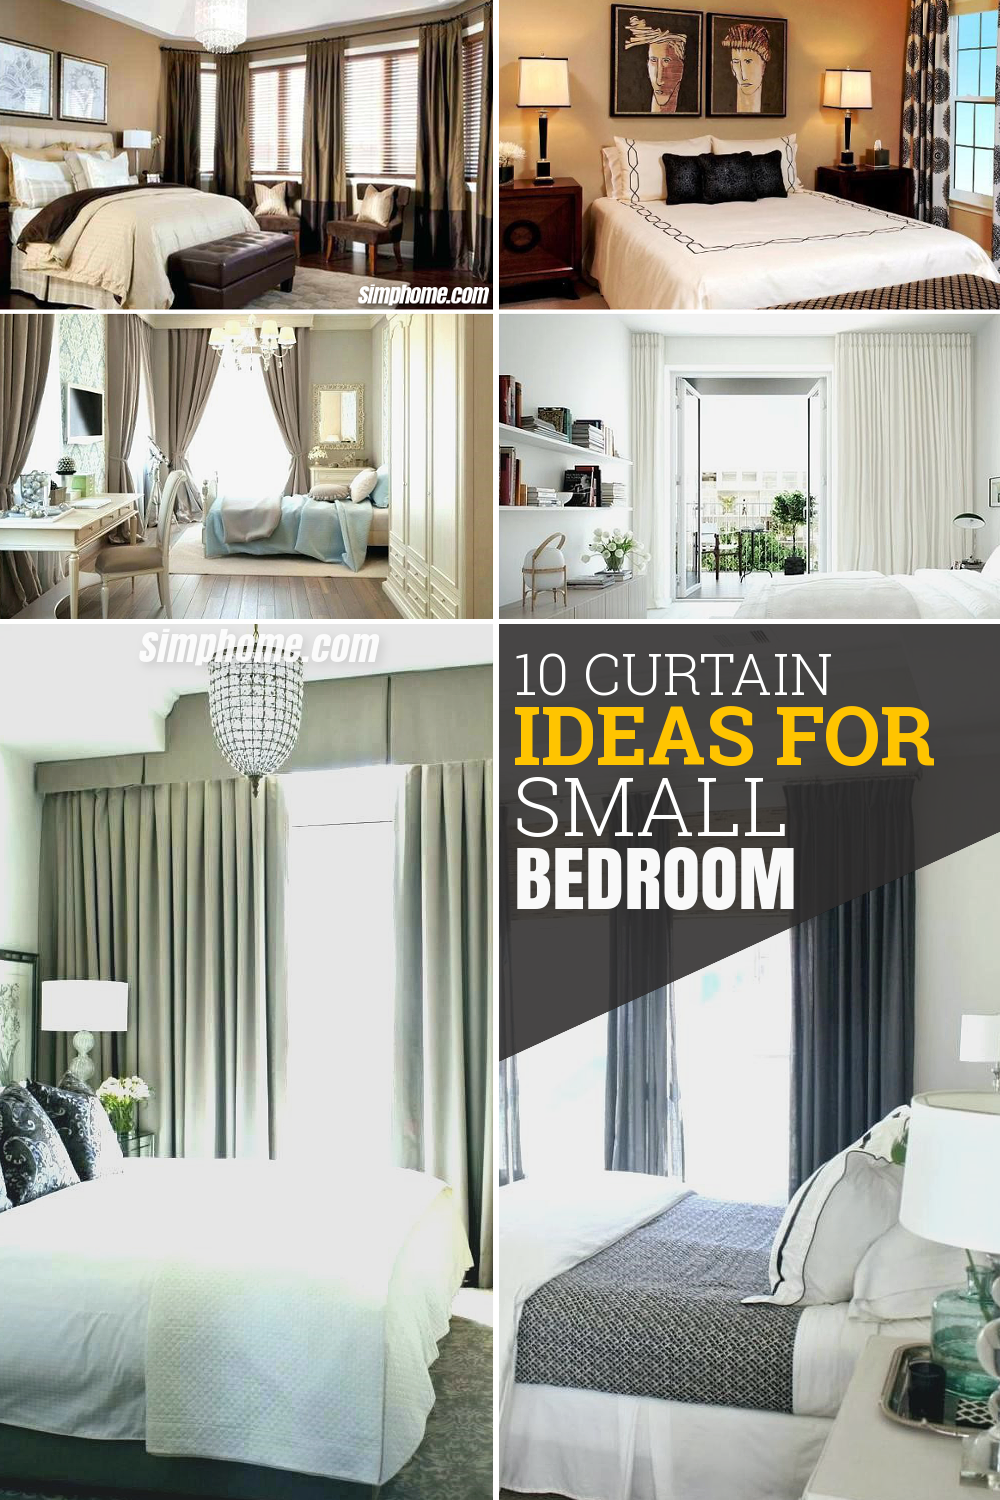 10 Curtain Ideas for Small Bedroom via Simphome com pintrerest image